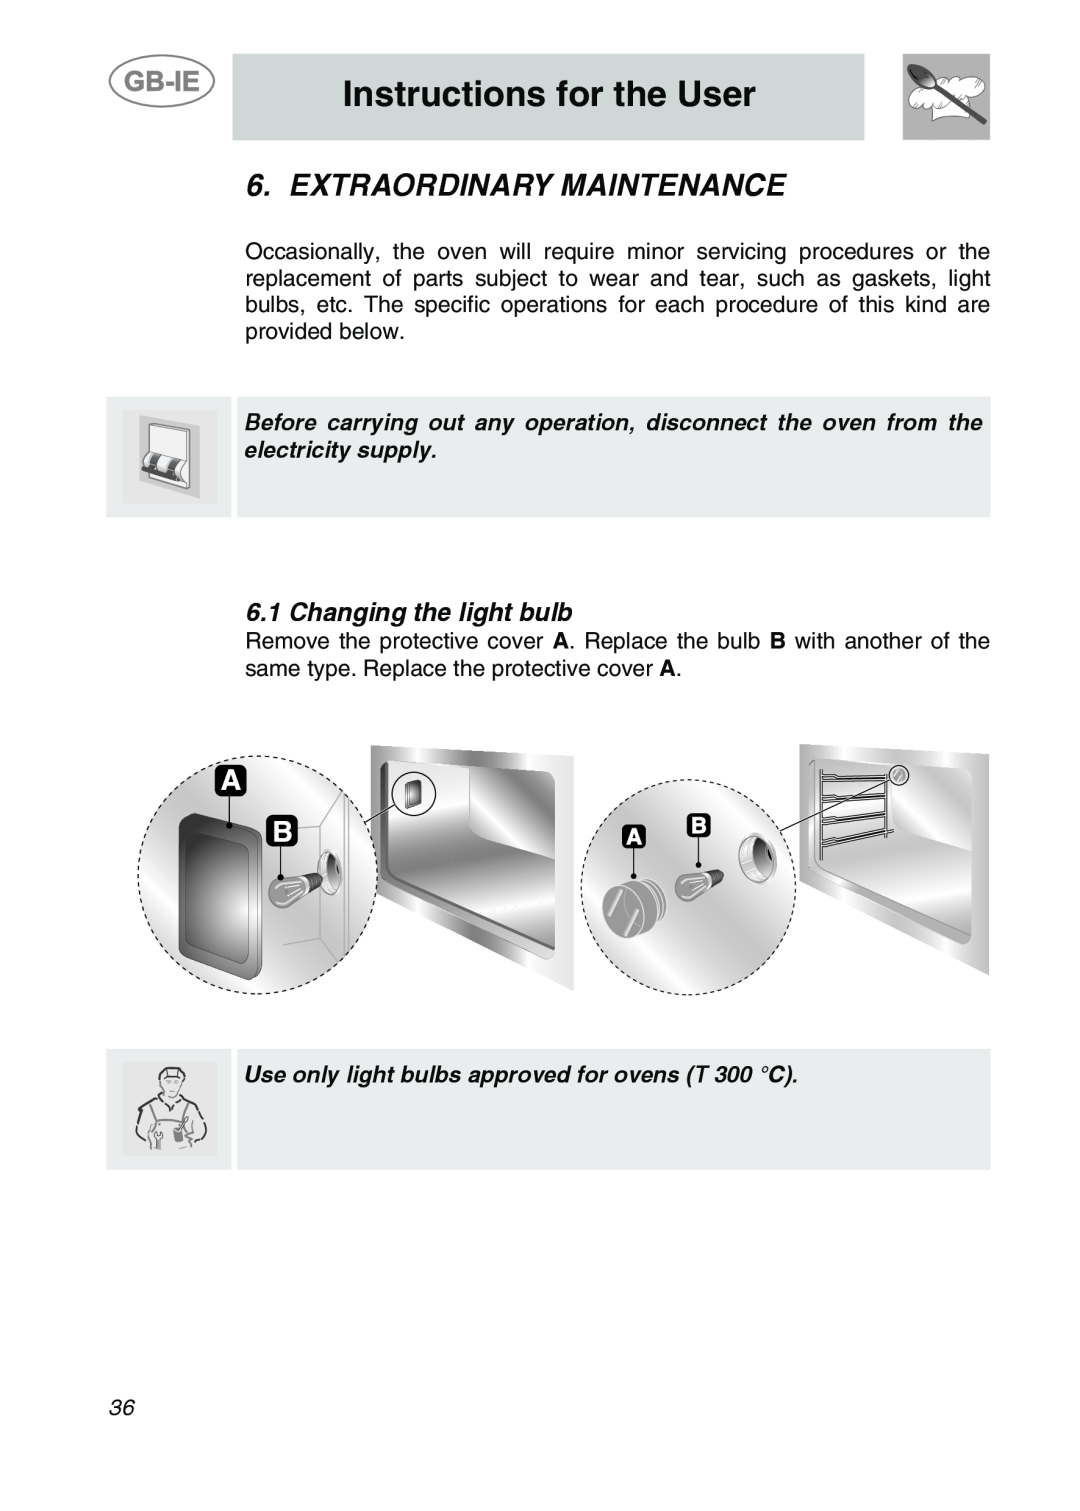 Smeg ALFA135V6 manual Extraordinary Maintenance, Changing the light bulb, Instructions for the User 